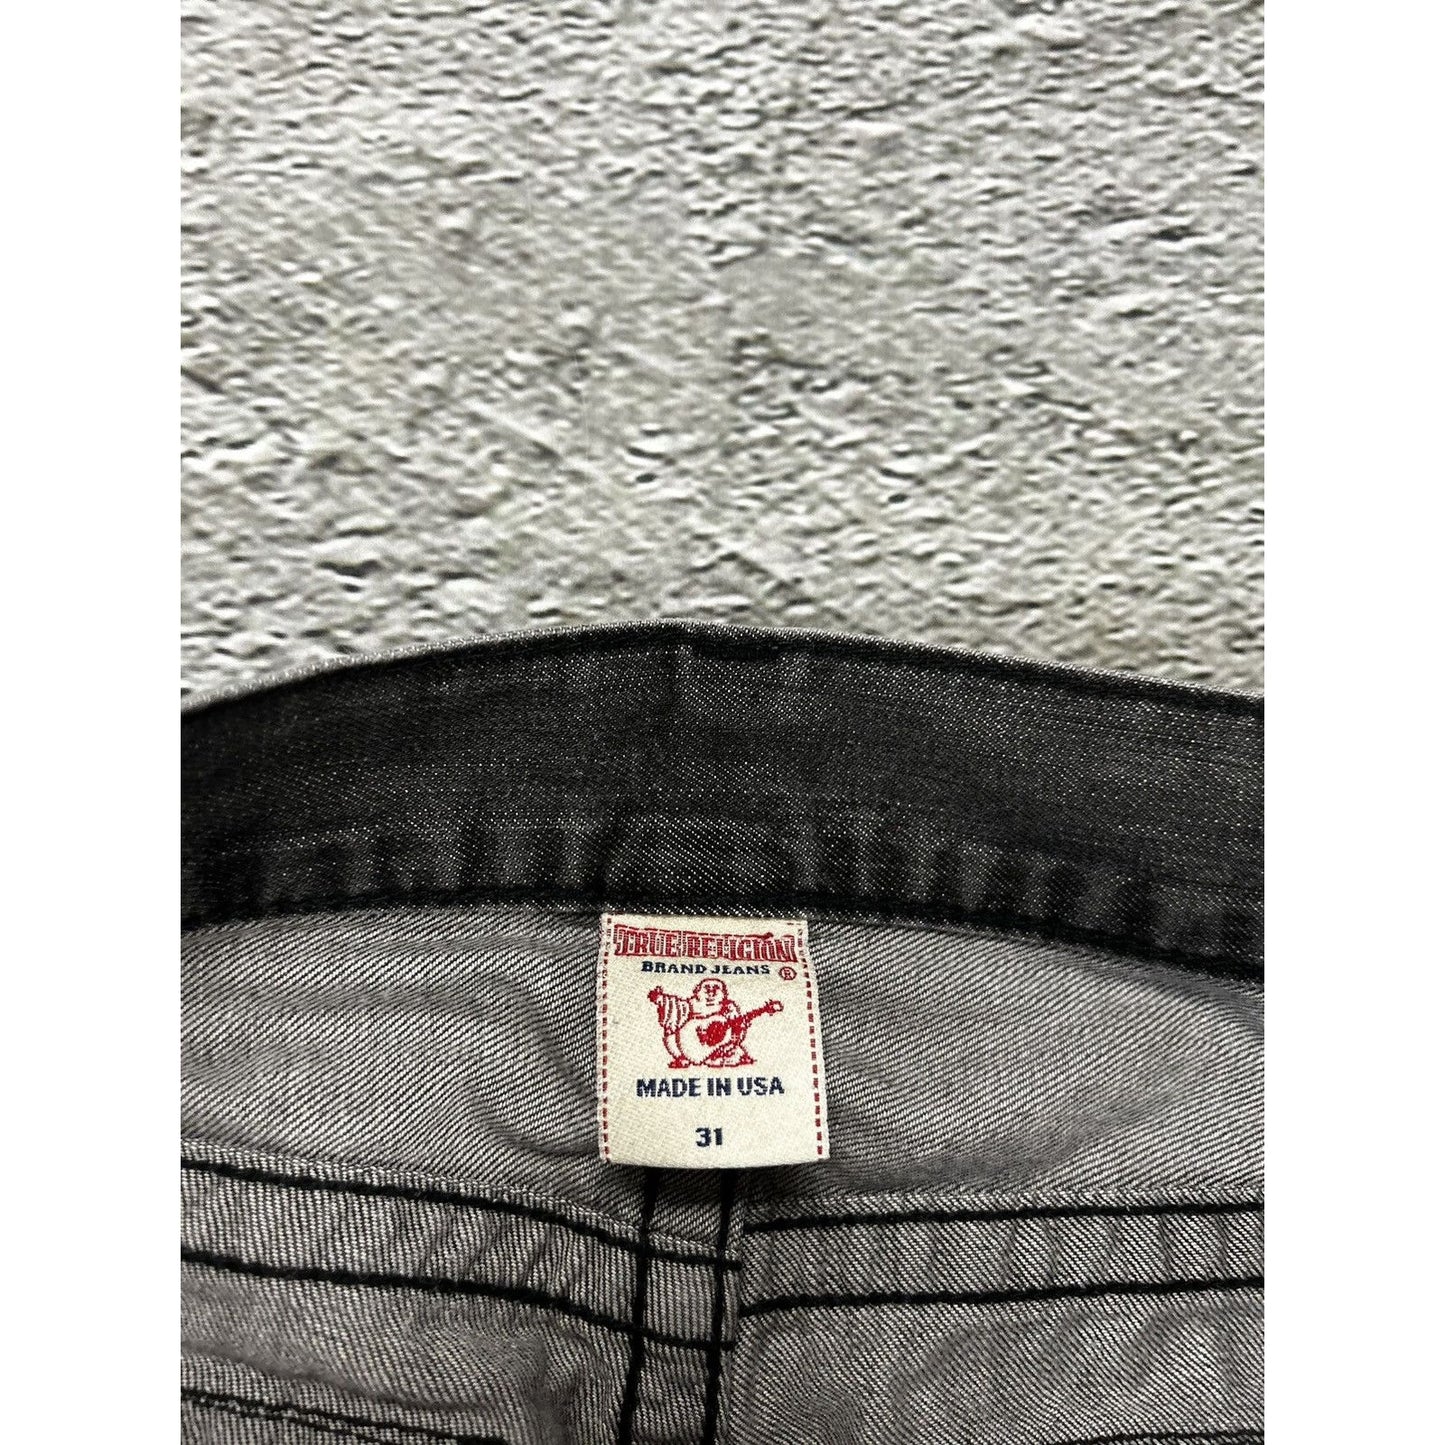 True Religion vintage grey jeans black stitching Ricky